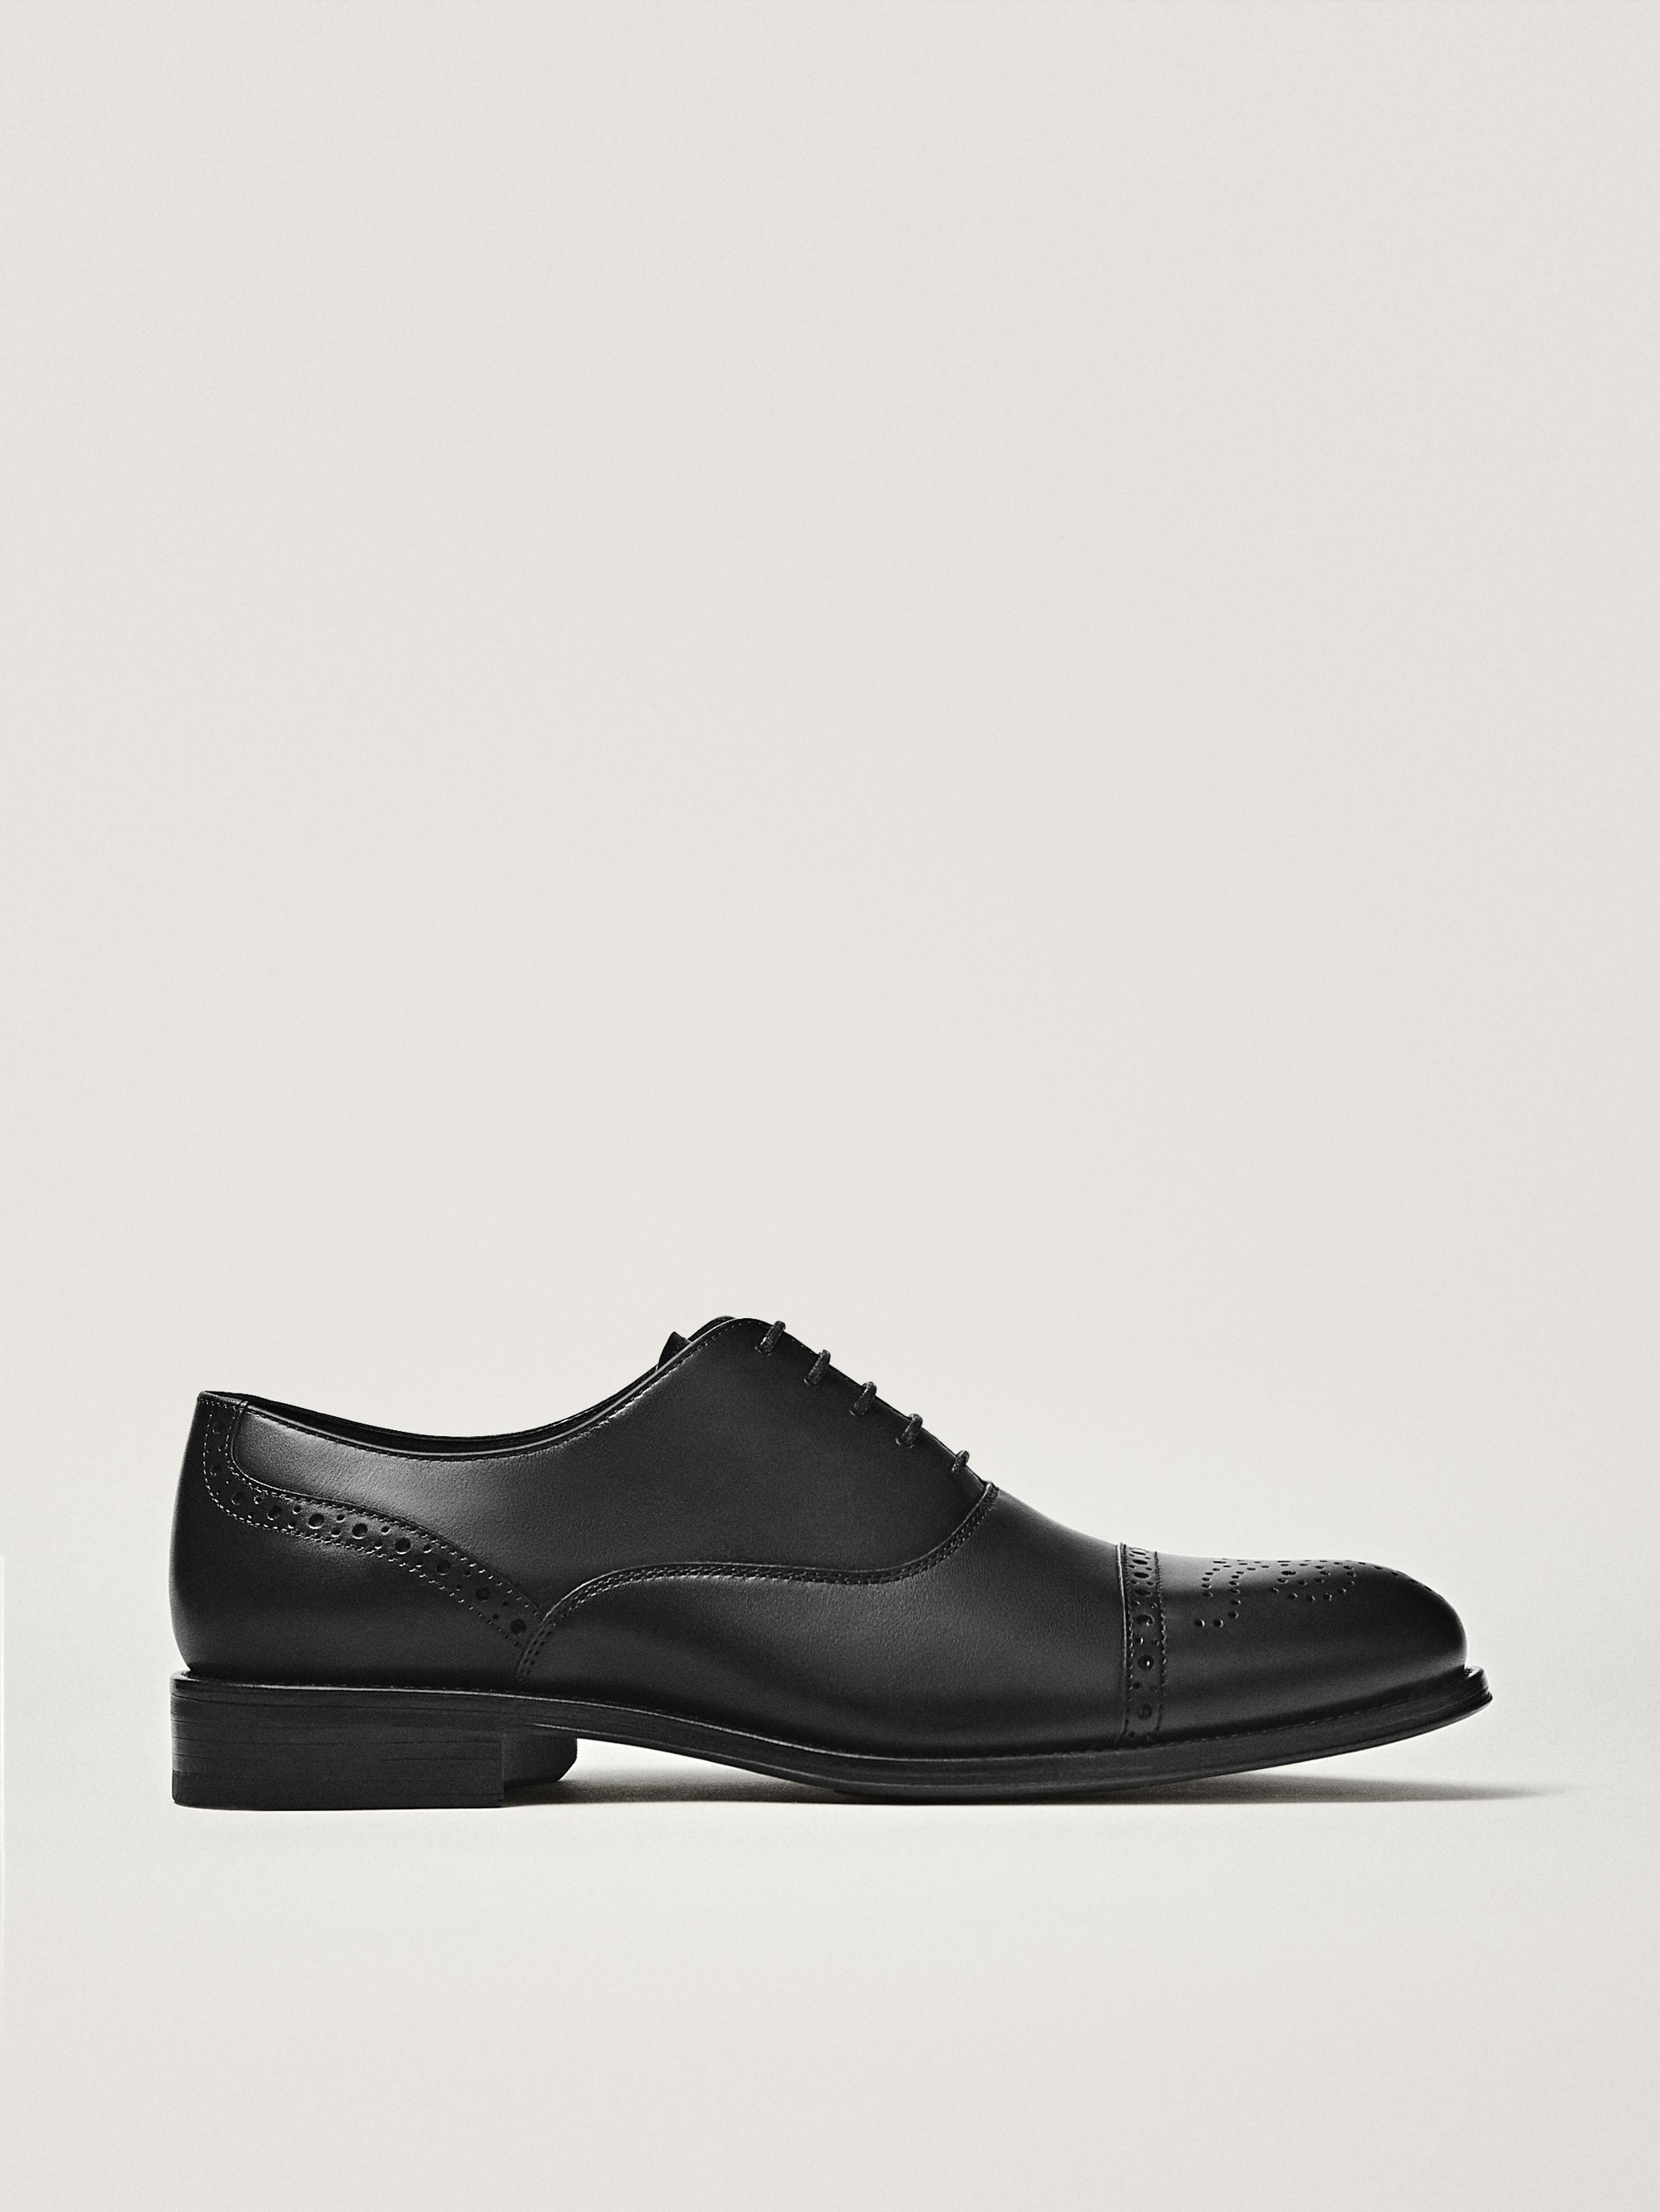 black leather smart shoes